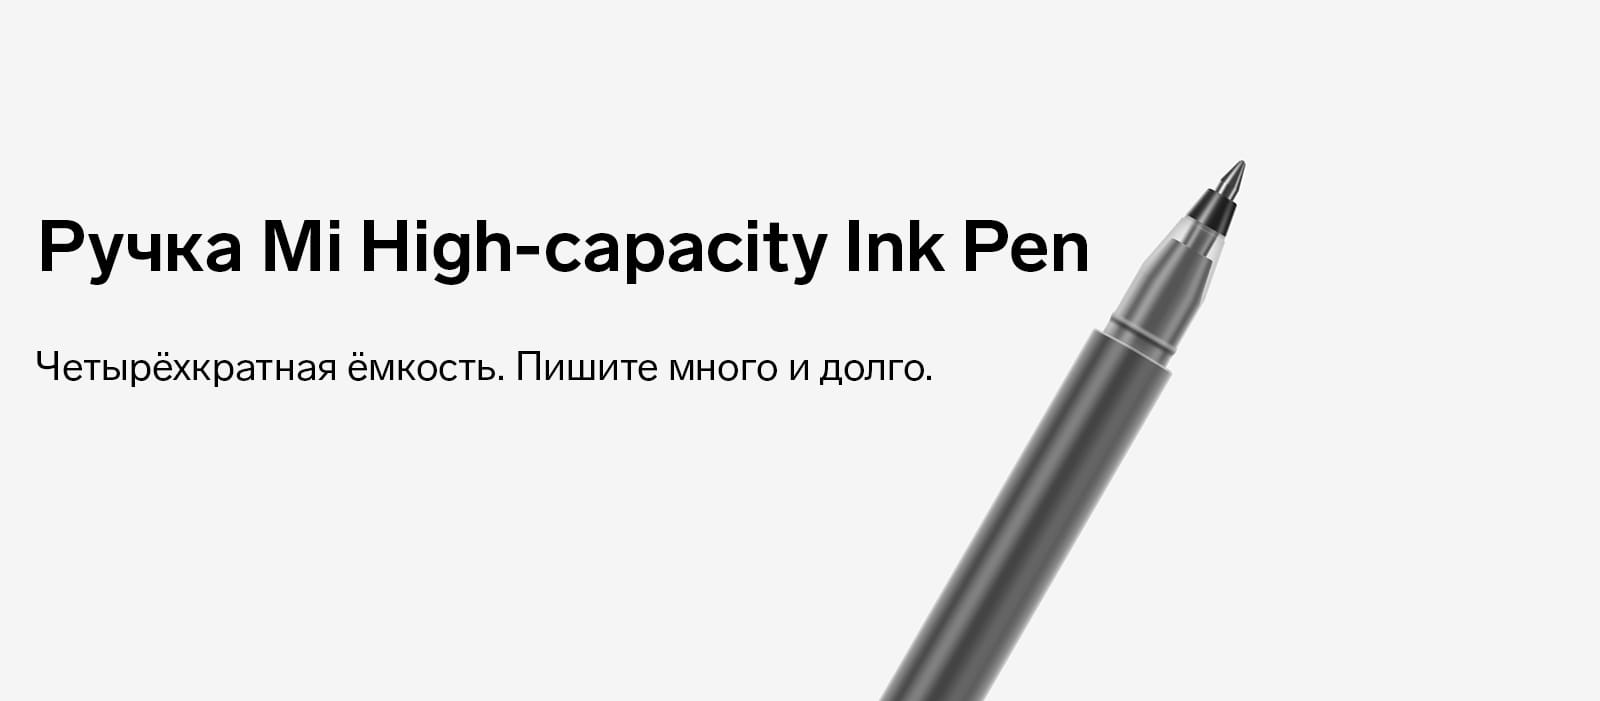 Ручка Mi High-capacity Ink Pen